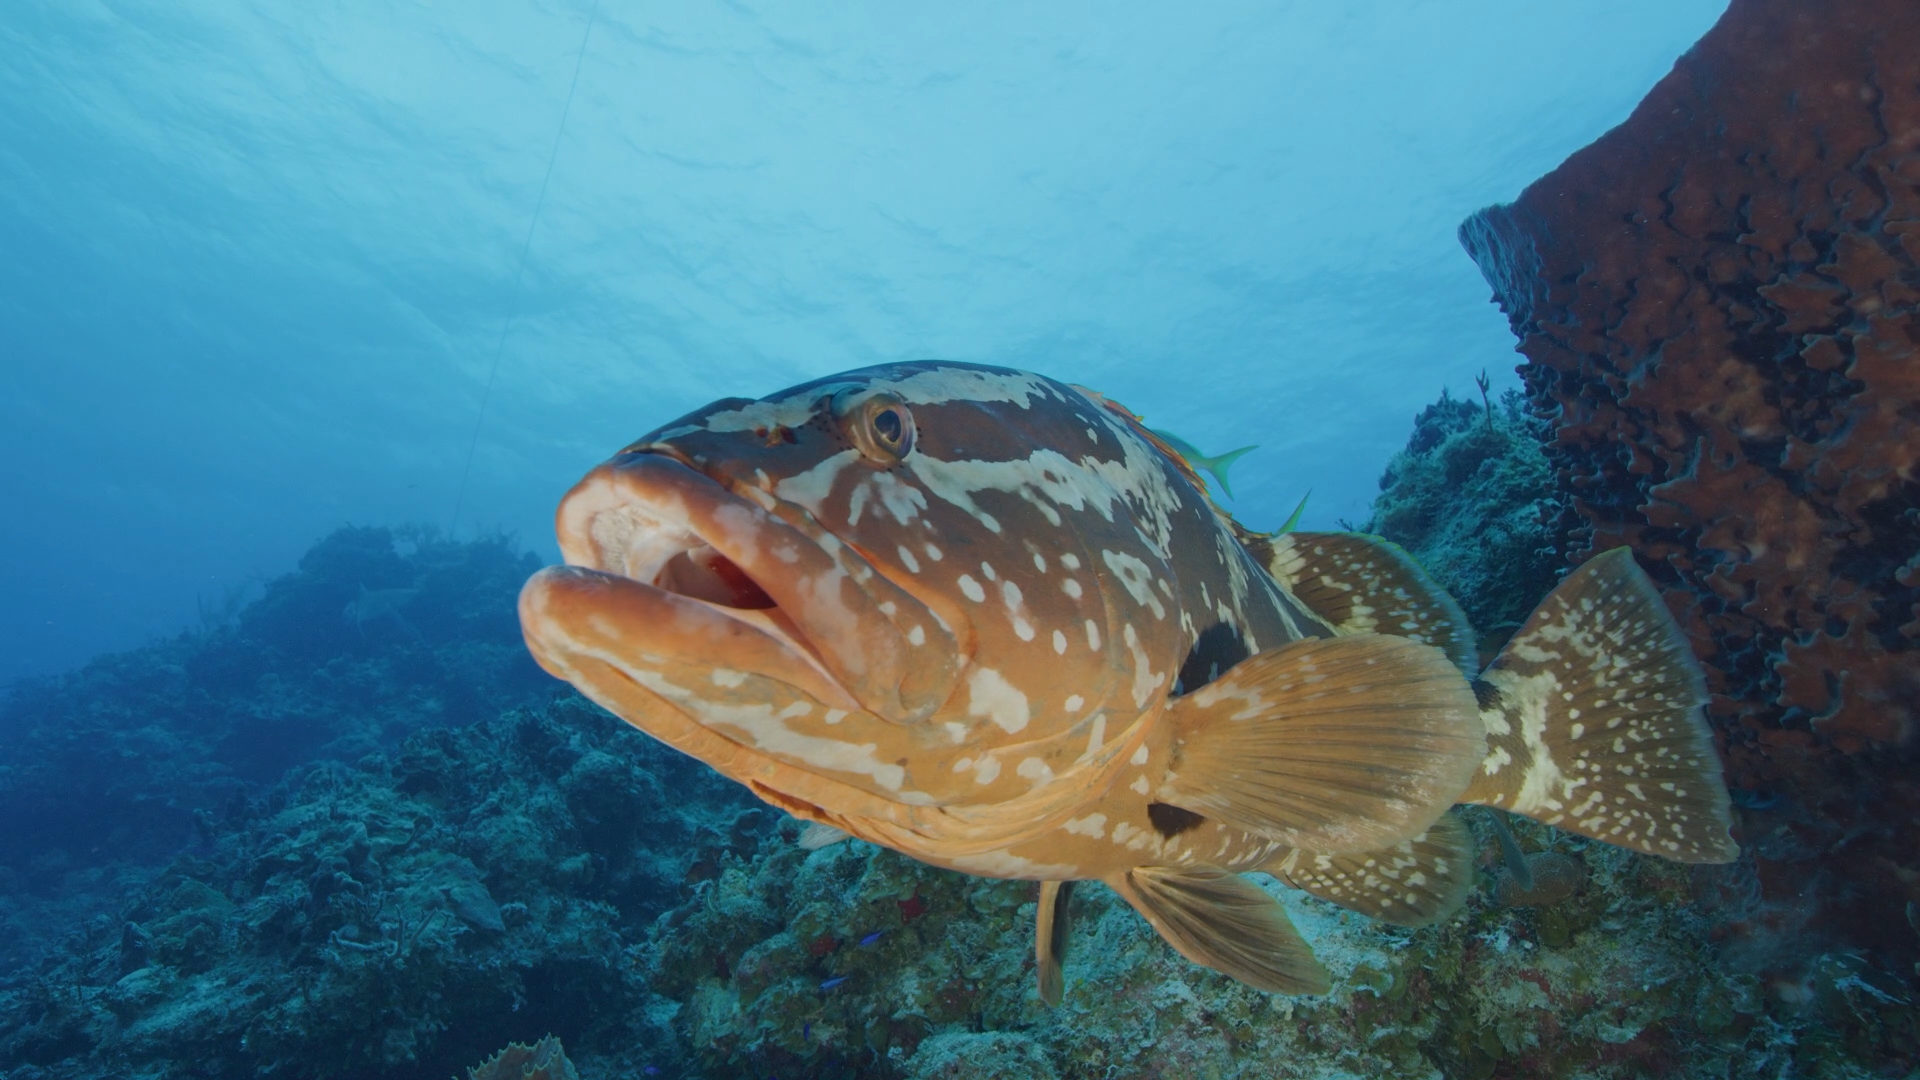 Grouper, Nassau